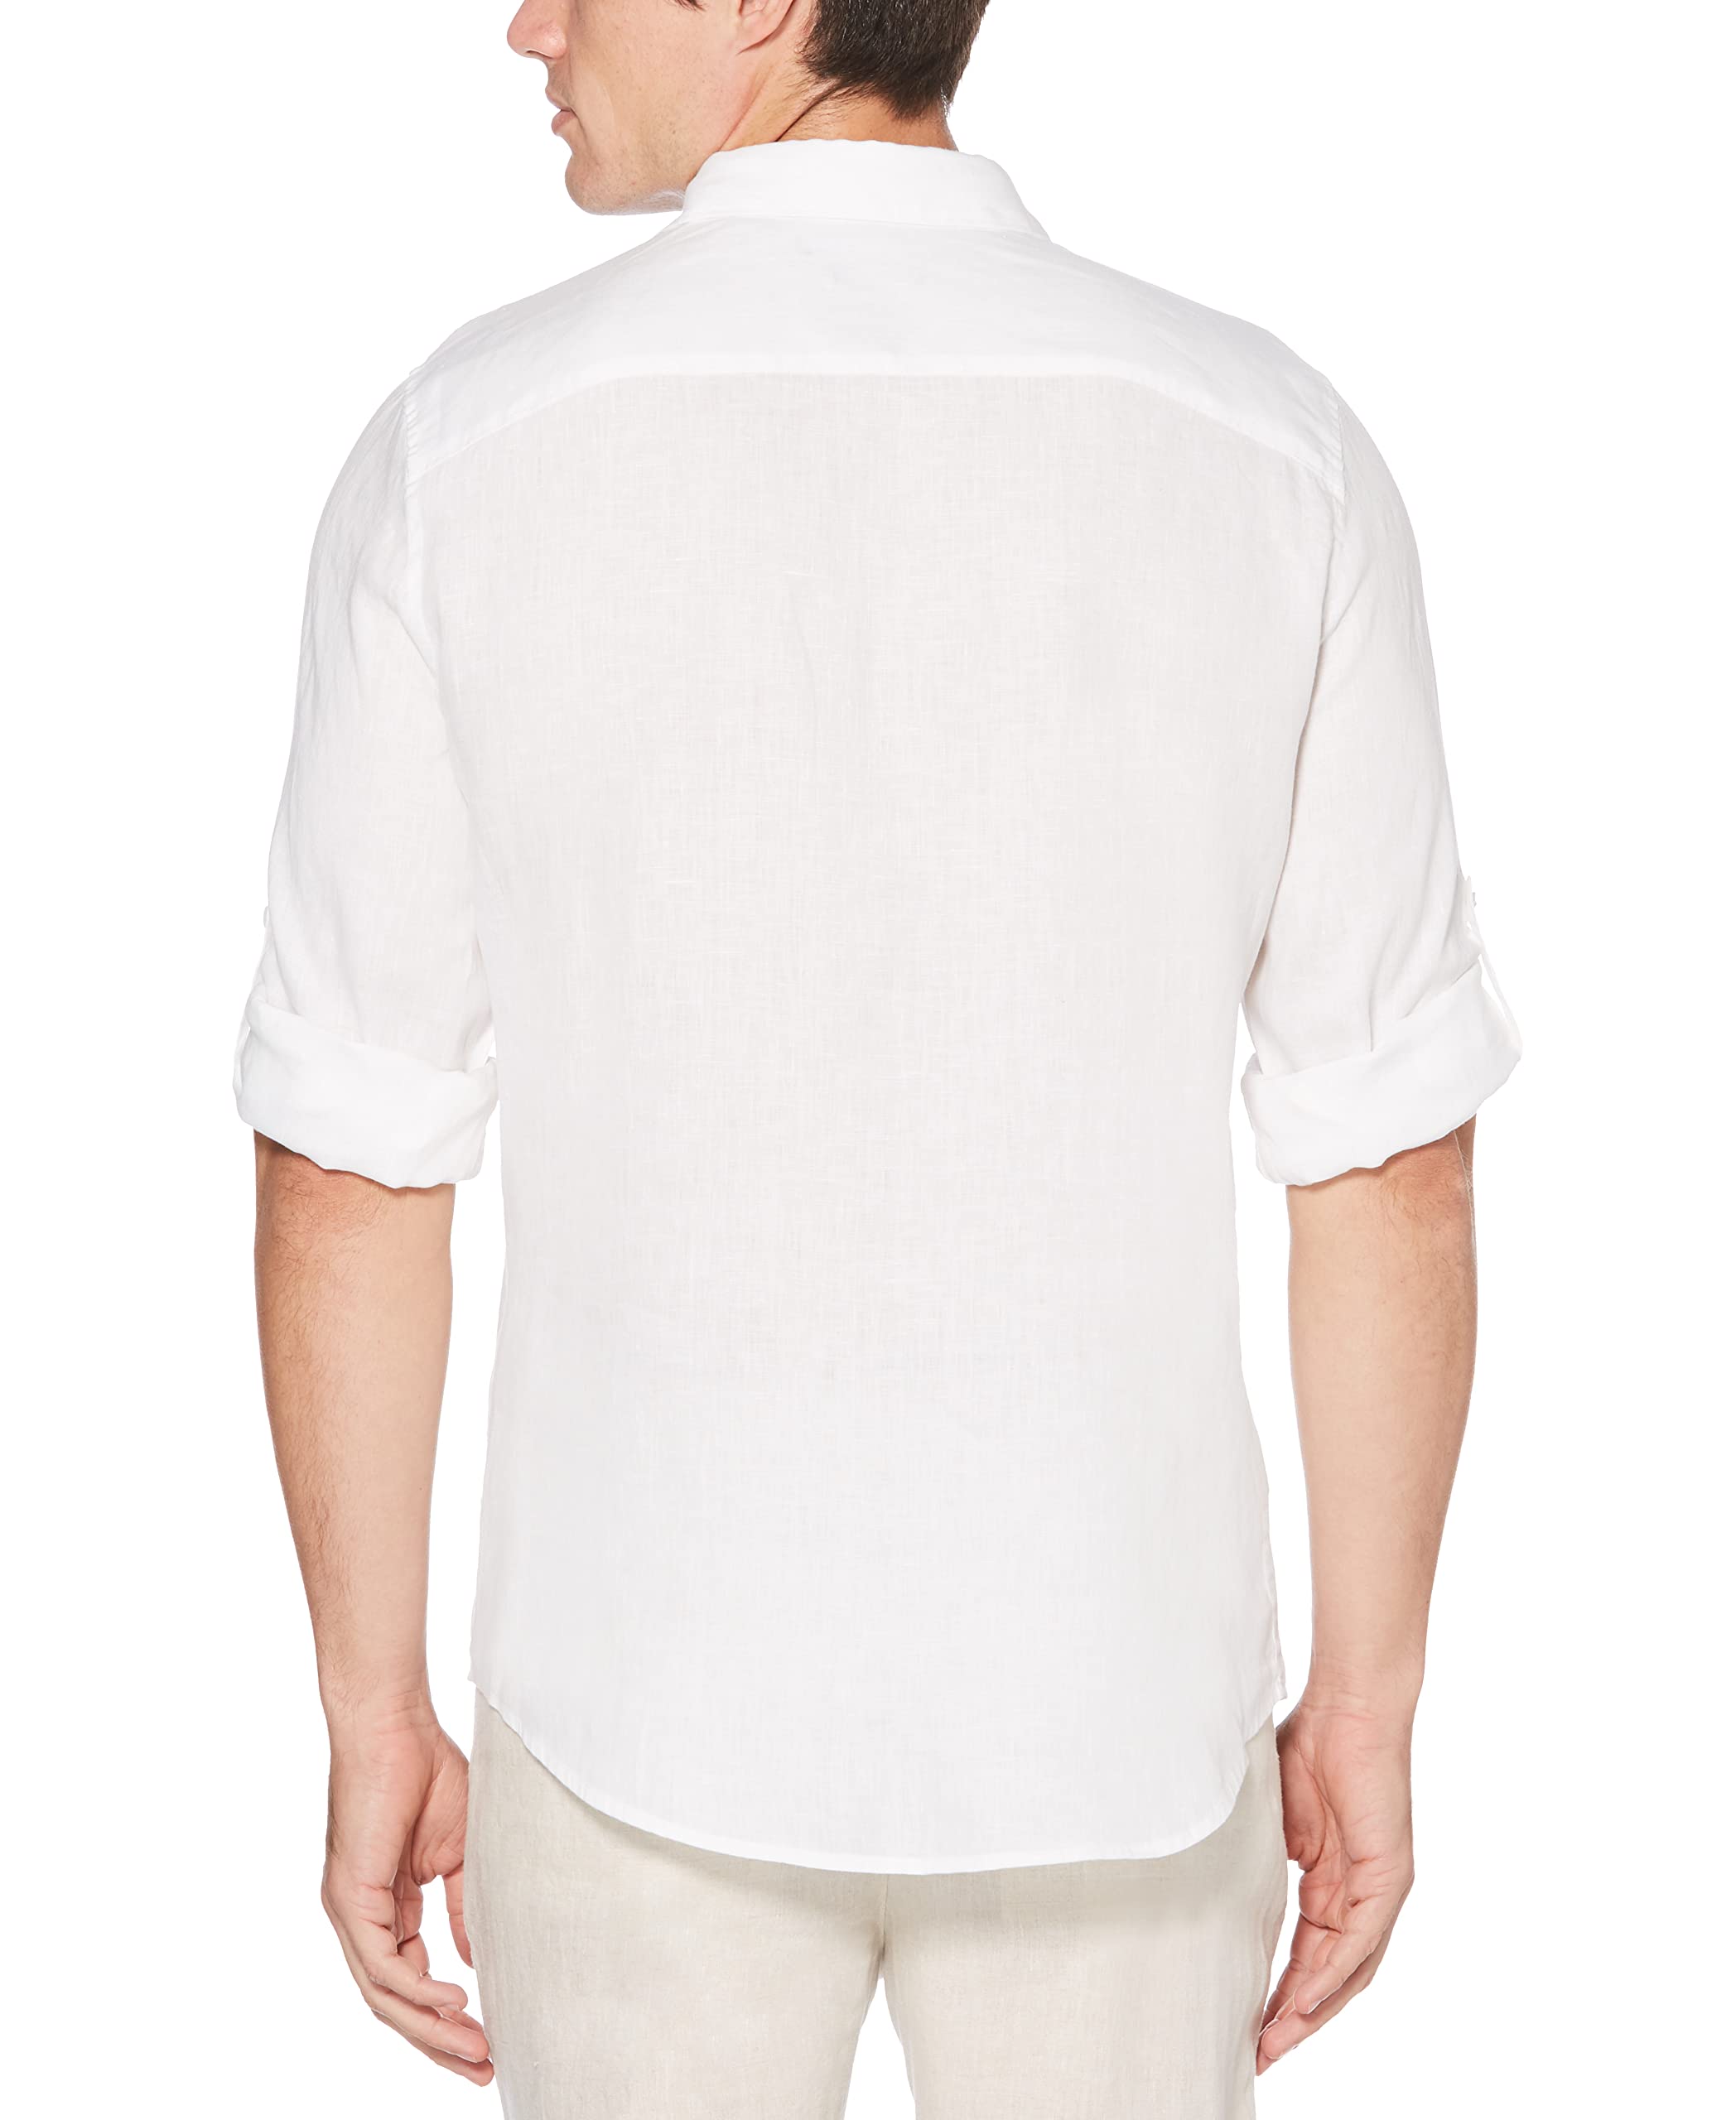 Perry Ellis Men's Roll Sleeve 100% Linen Button-Down Shirt (Size X-Small - 5X Big & Tall)